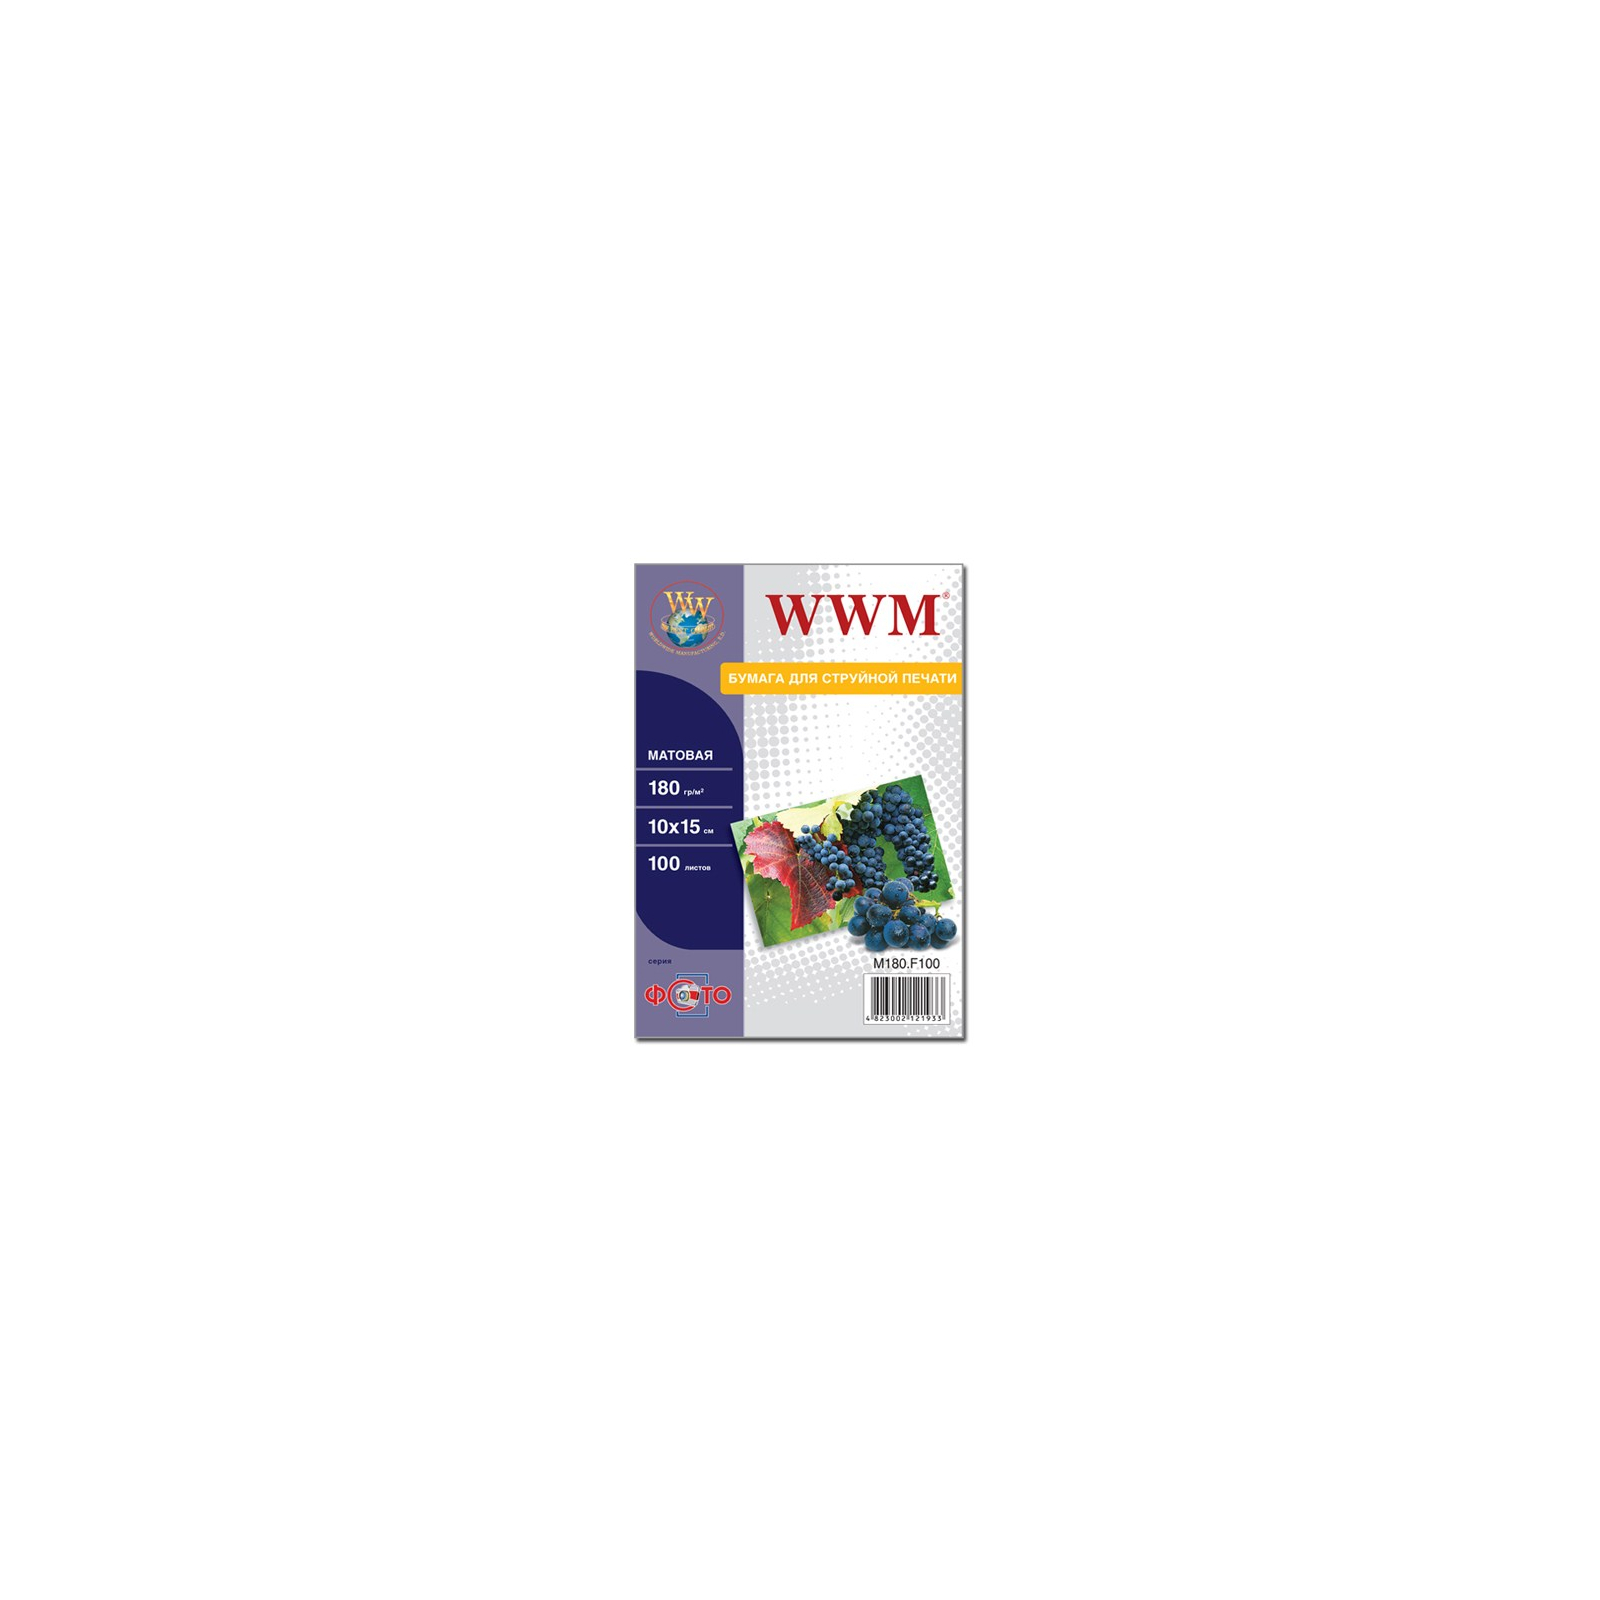 Фотобумага WWM 10x15 (M180.F100)